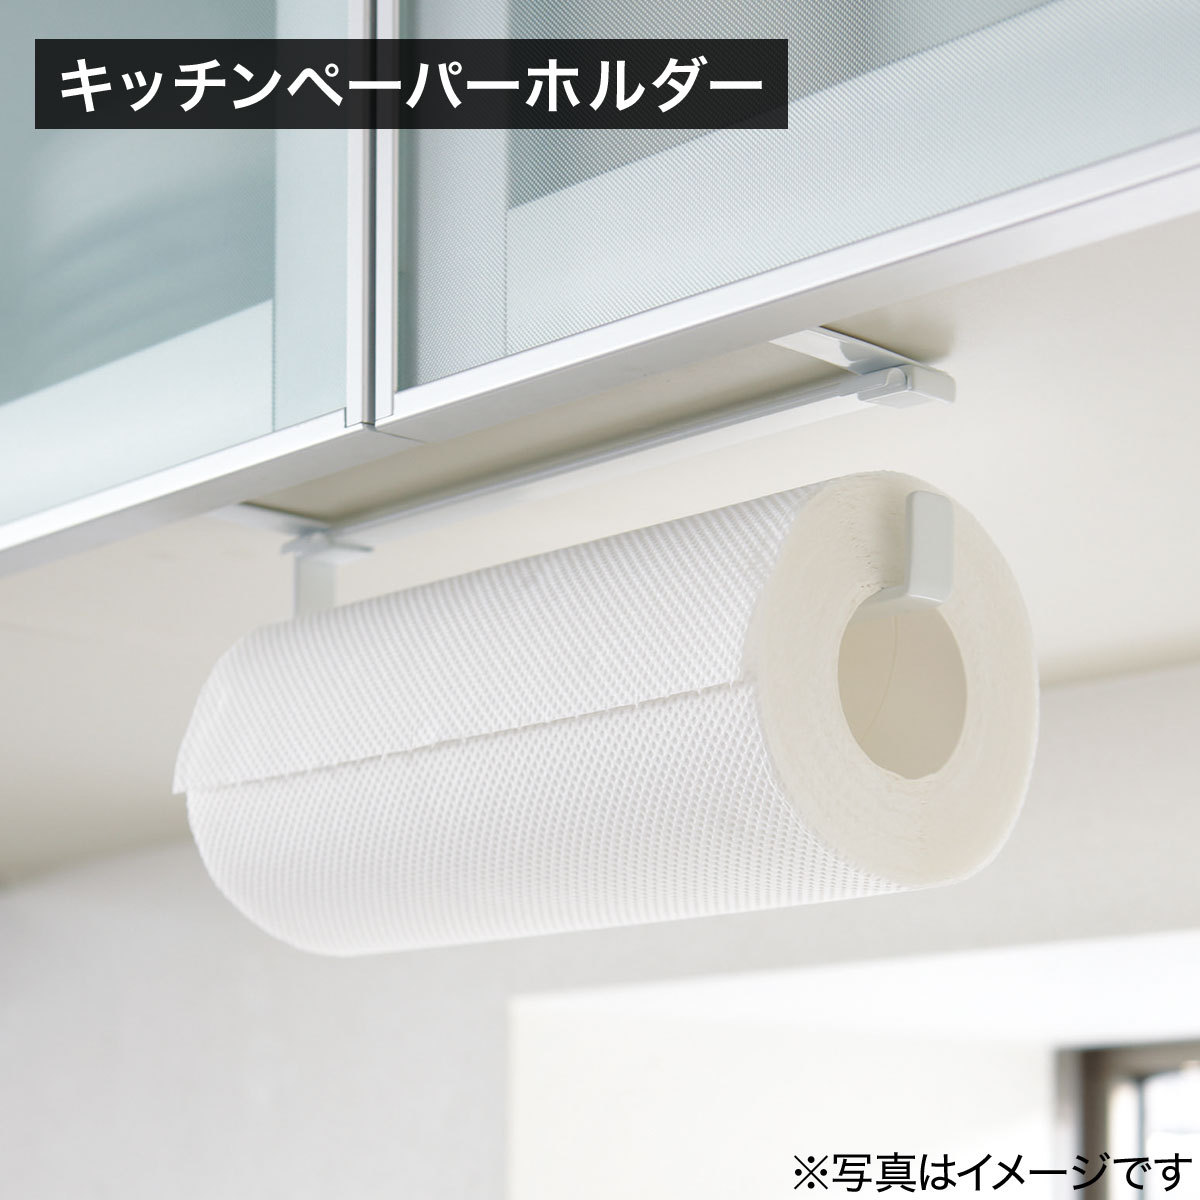  paper &amp; towel hanger FLAT(WH)nitoli